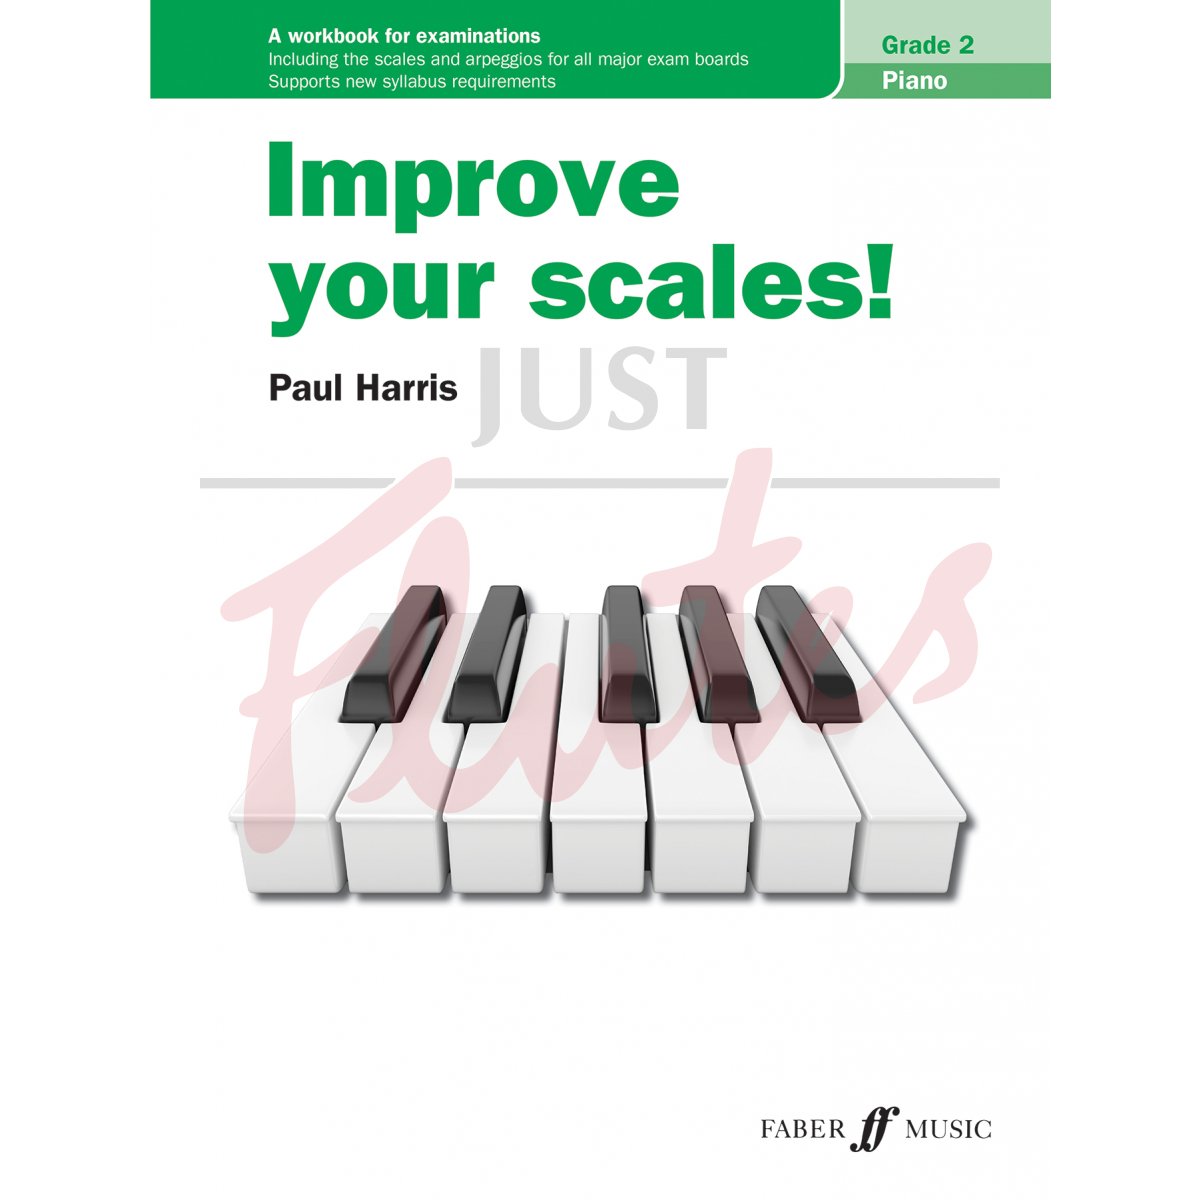 Improve Your Scales! [Piano] Grade 2